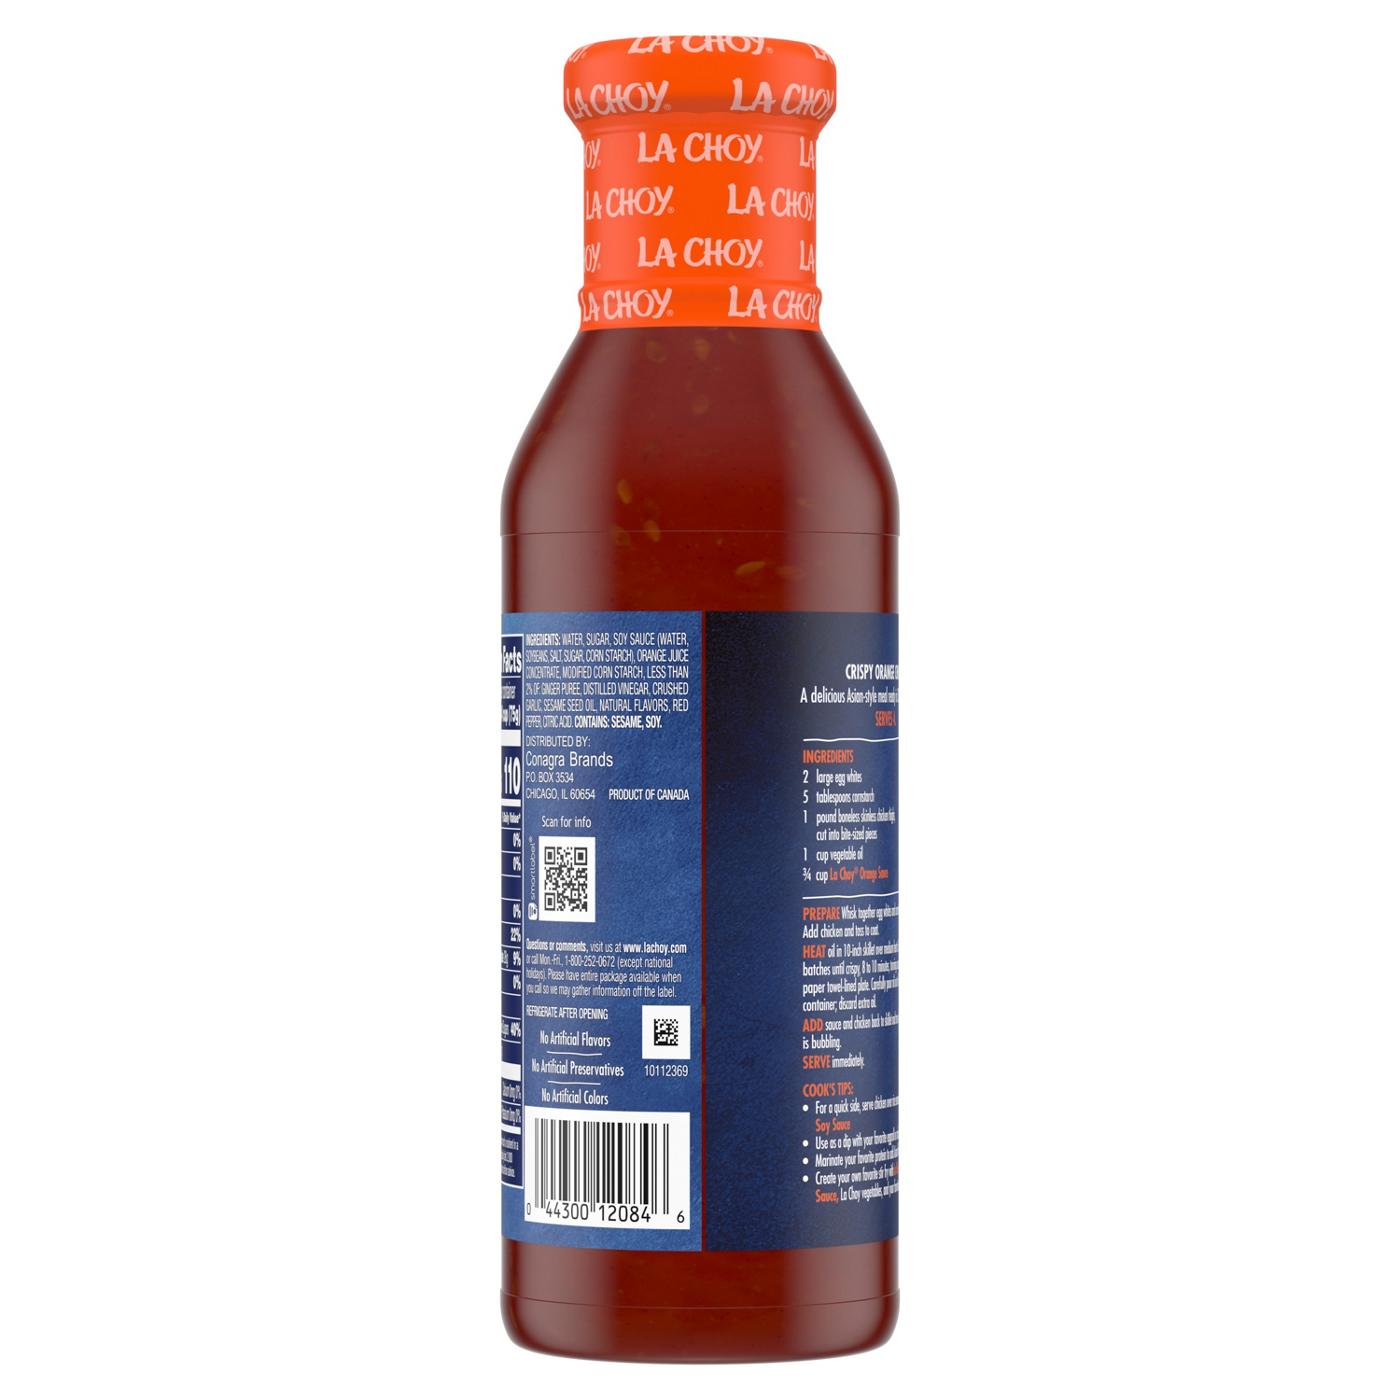 La Choy Orange-Flavored Stir Fry Sauce & Marinade; image 3 of 4